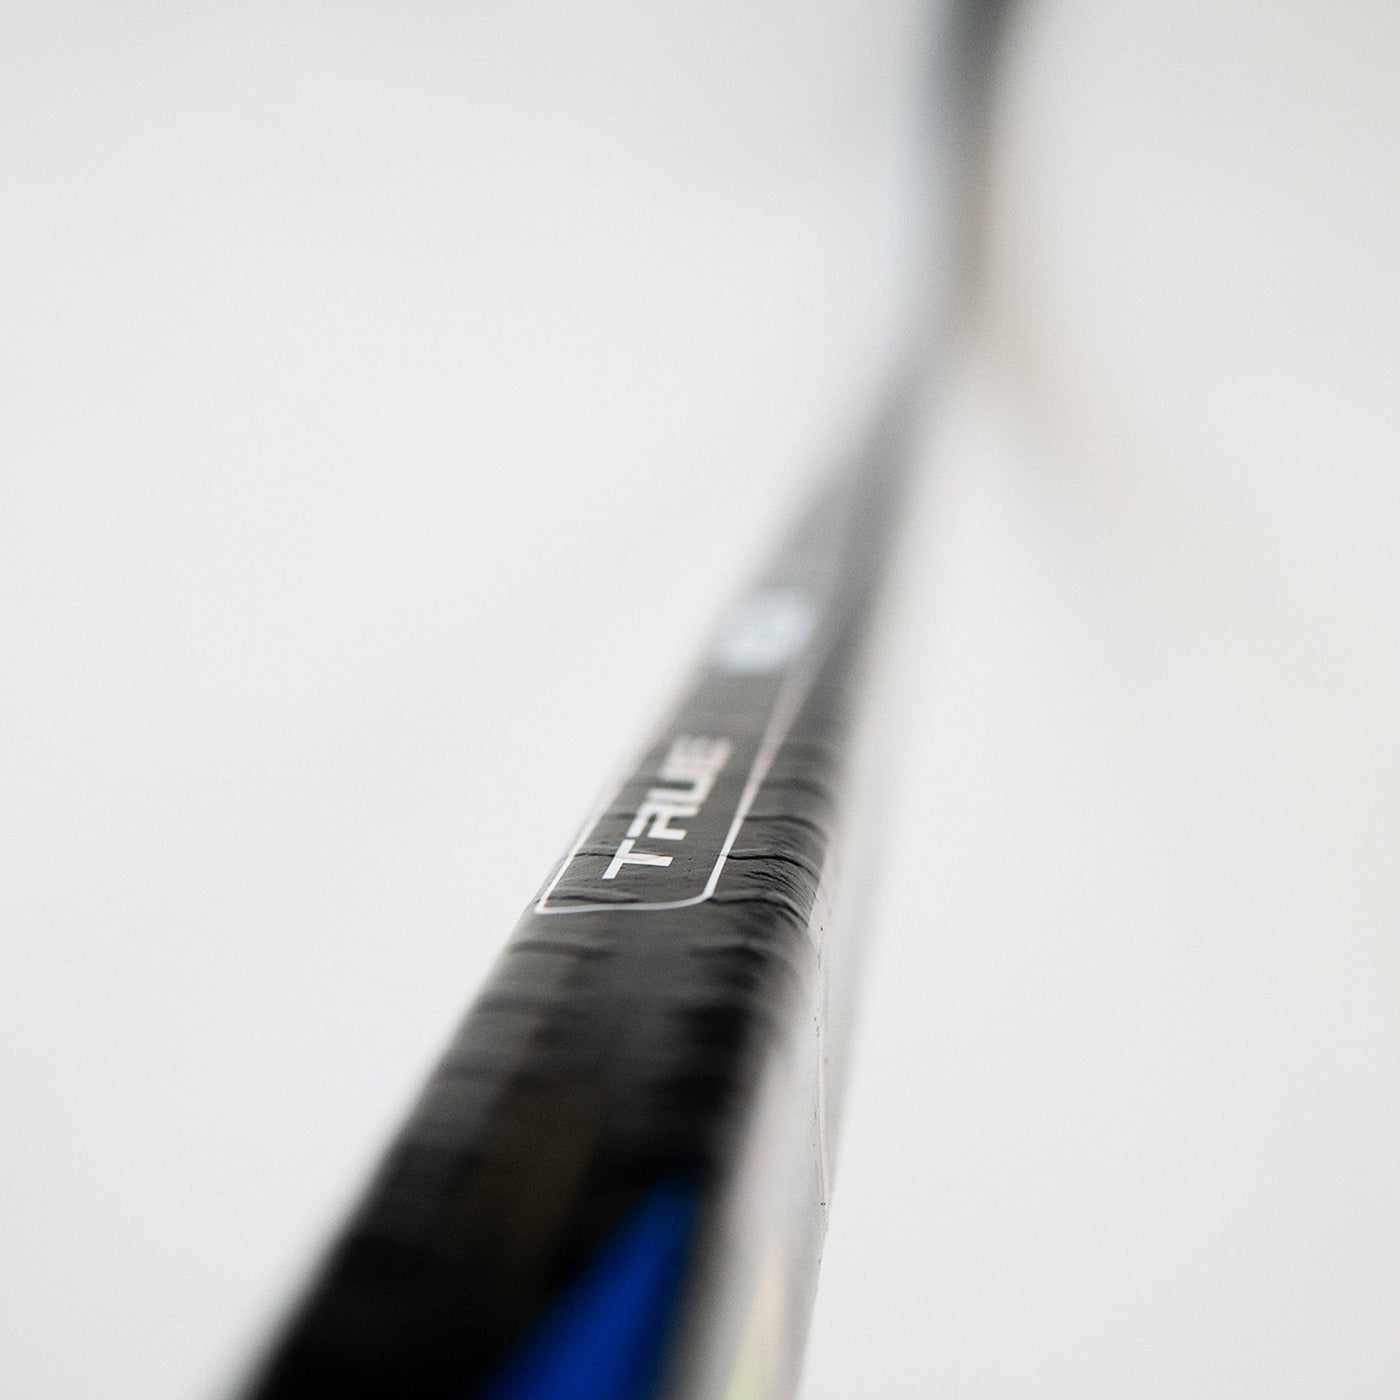 TRUE Catalyst 9X Pro Stock Senior Hockey Stick - Jake Muzzin - The Hockey Shop Source For Sports